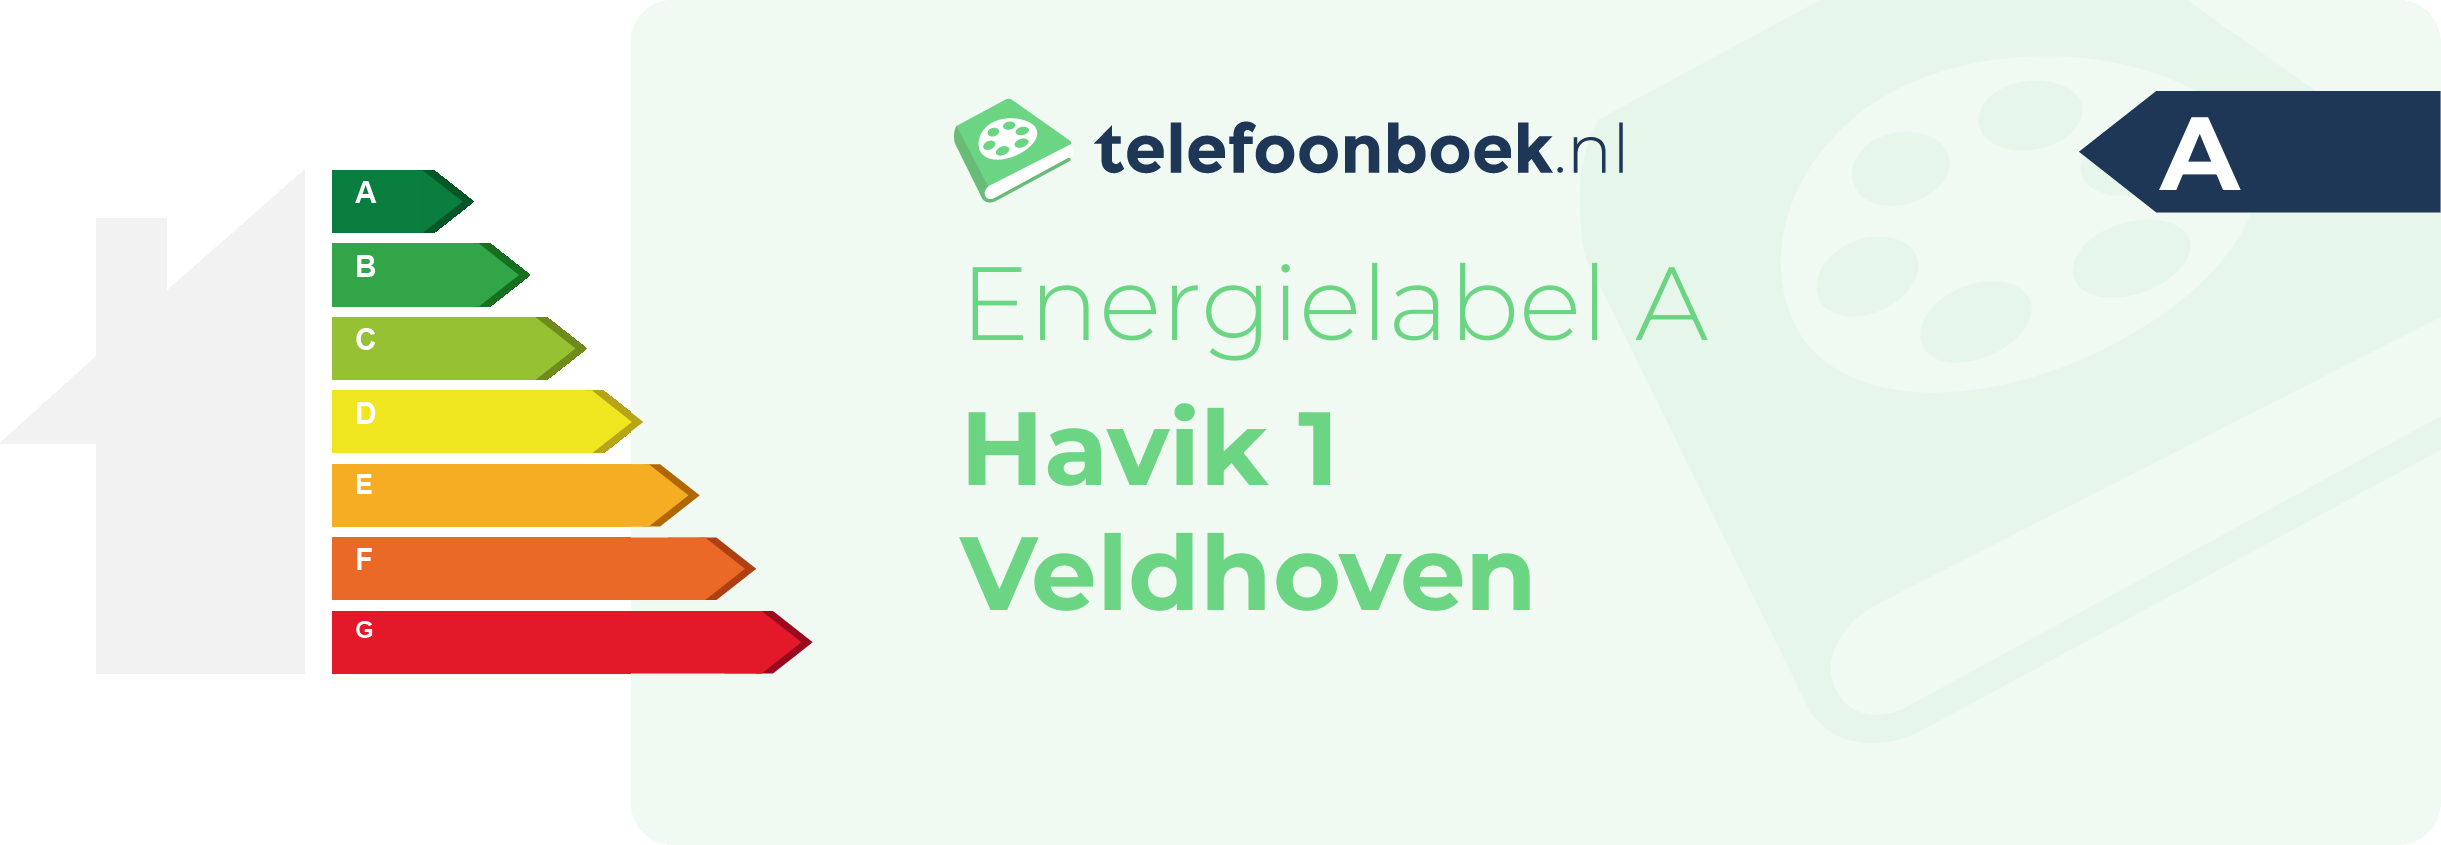 Energielabel Havik 1 Veldhoven